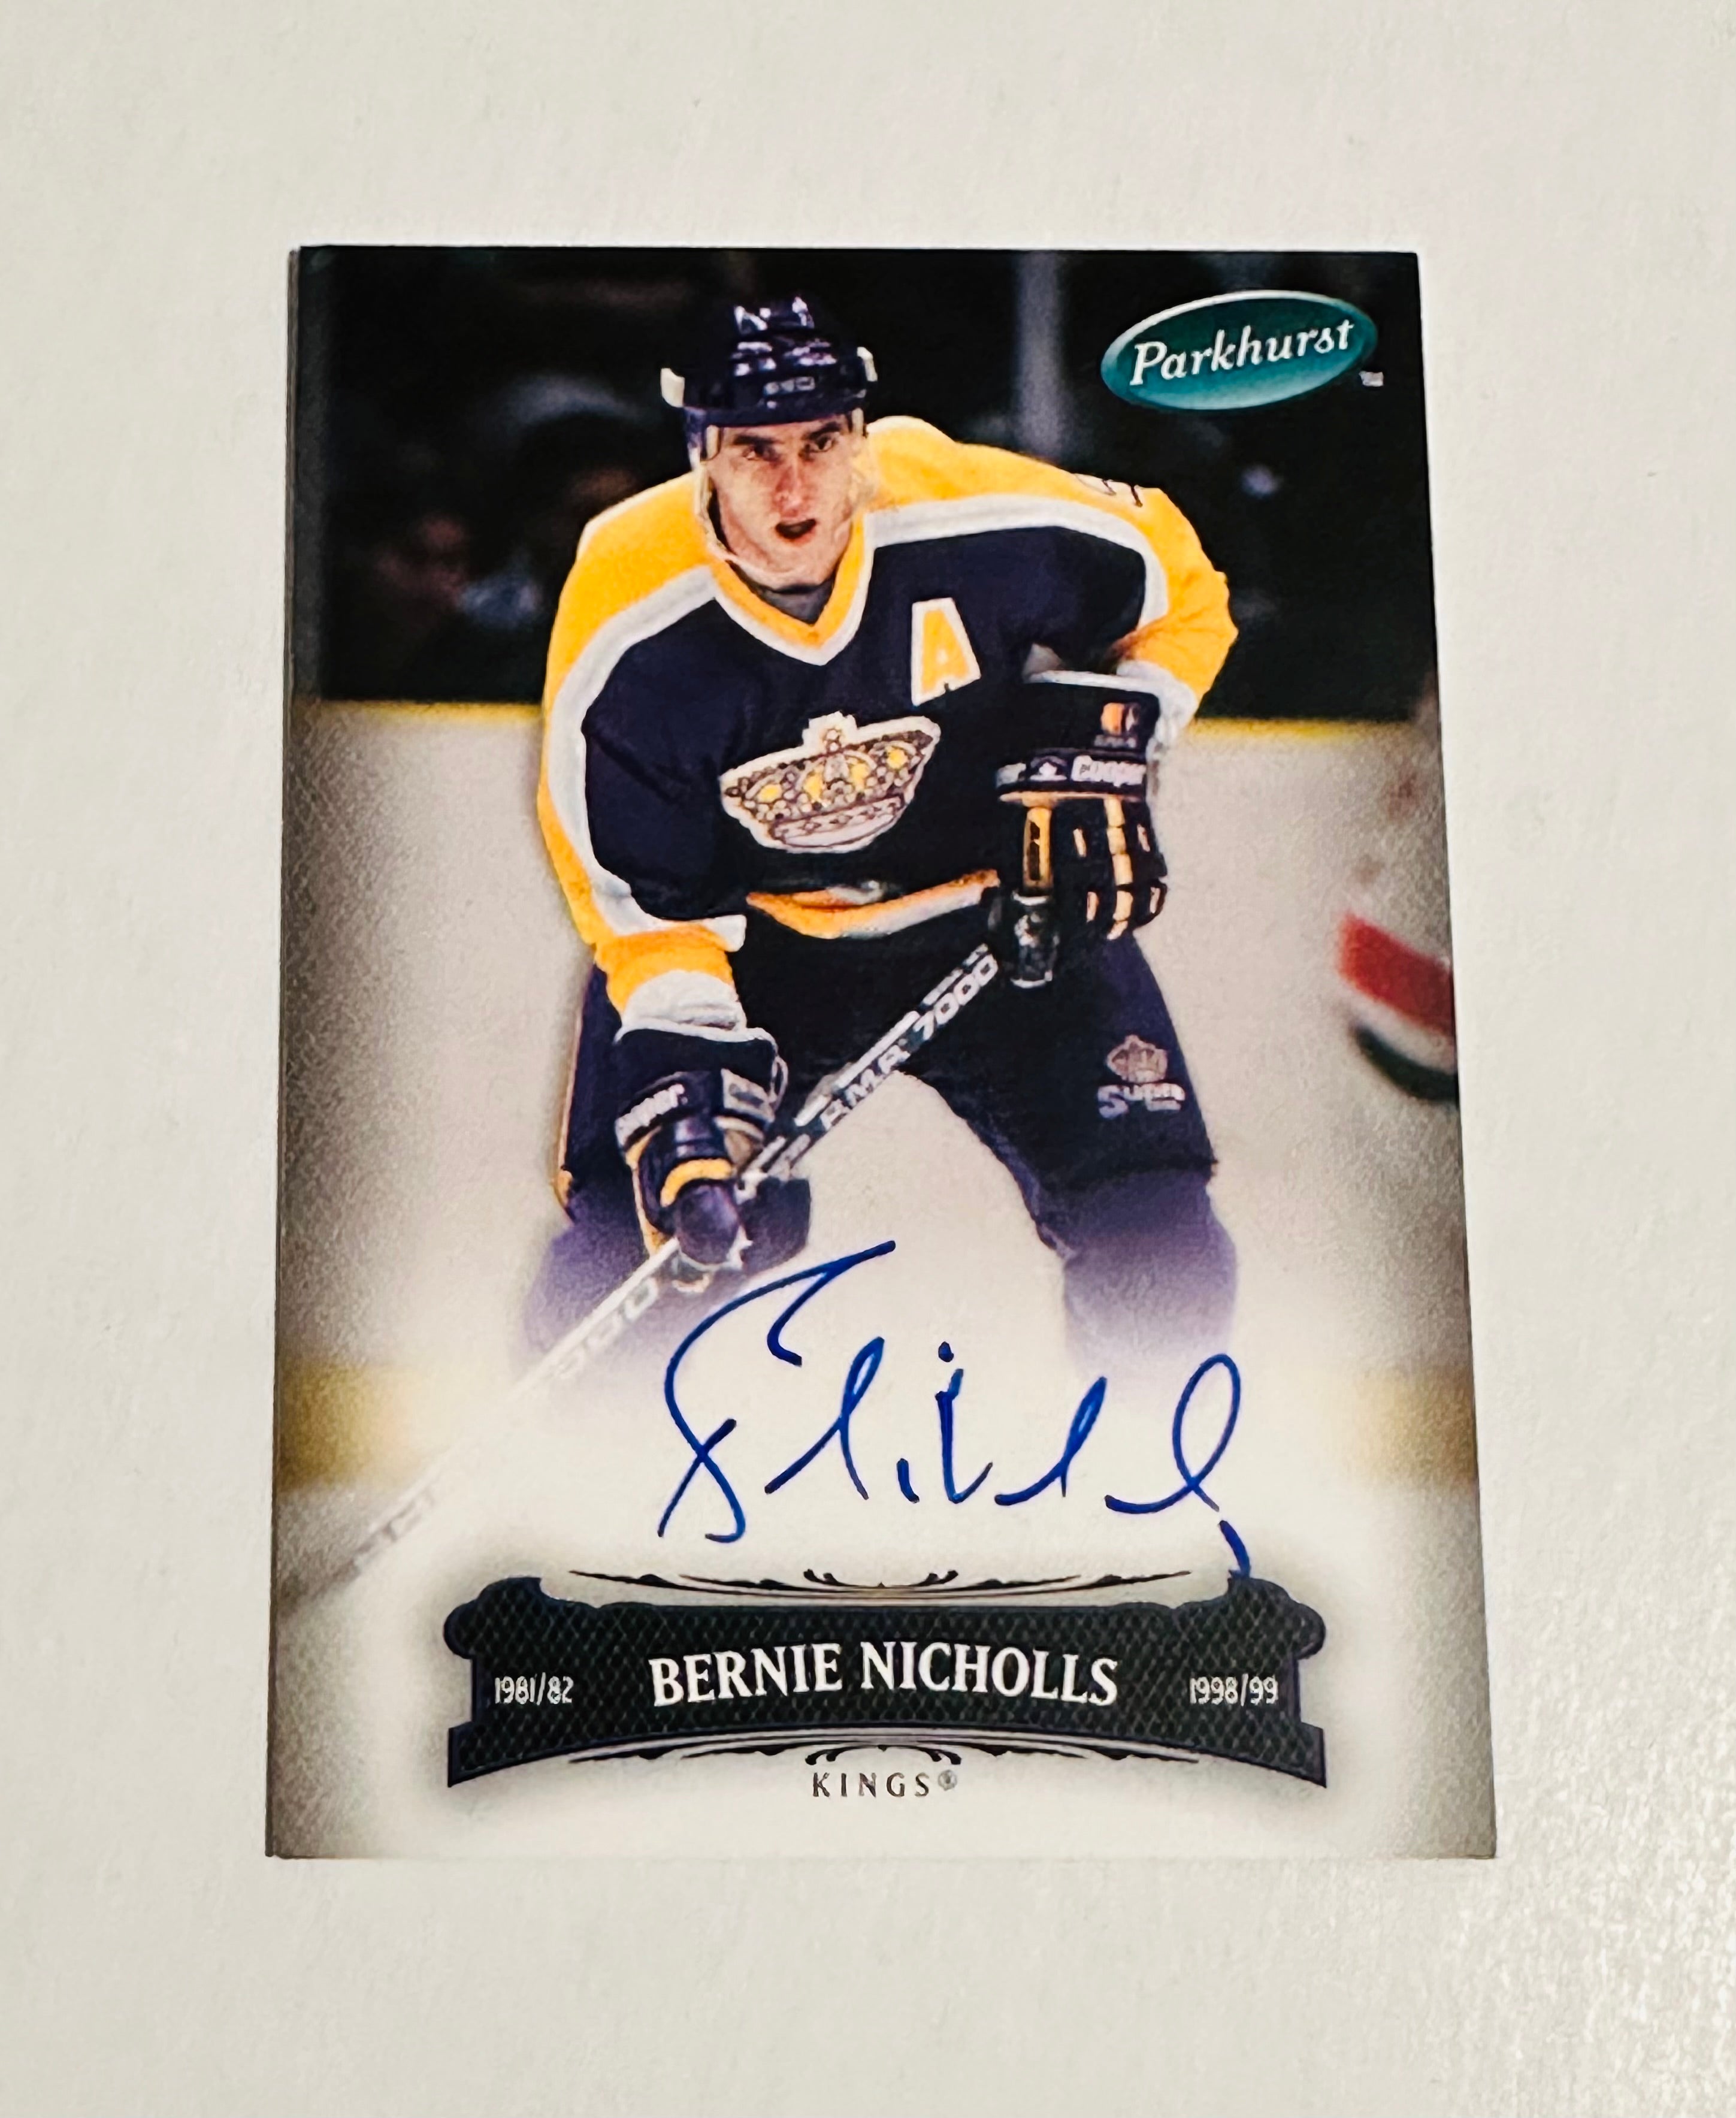 Bernie Nicholls hockey autograph insert card